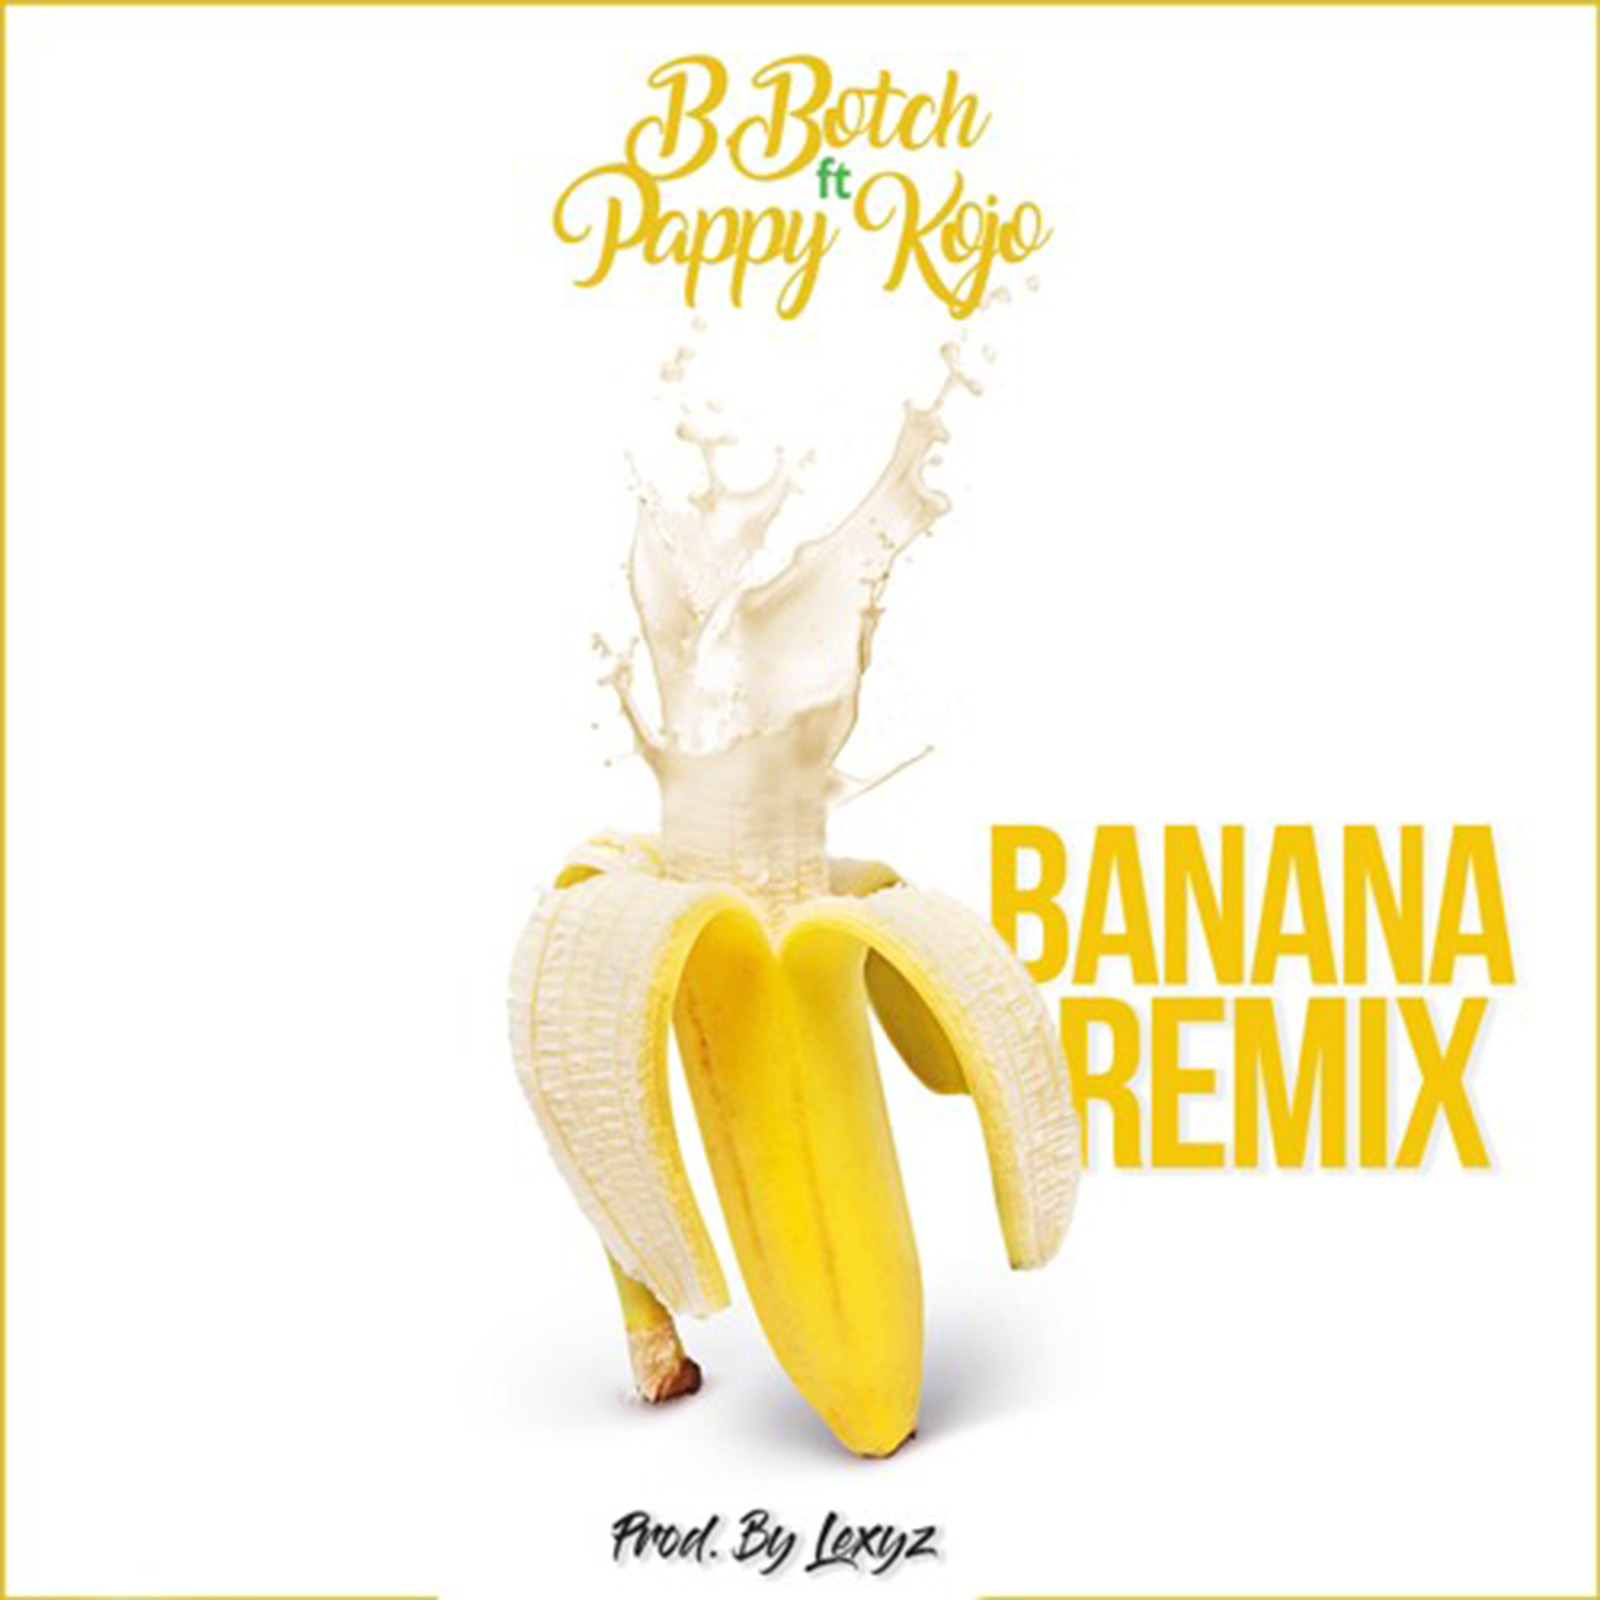 Banana Remix by B.Botch feat. Pappy Kojo